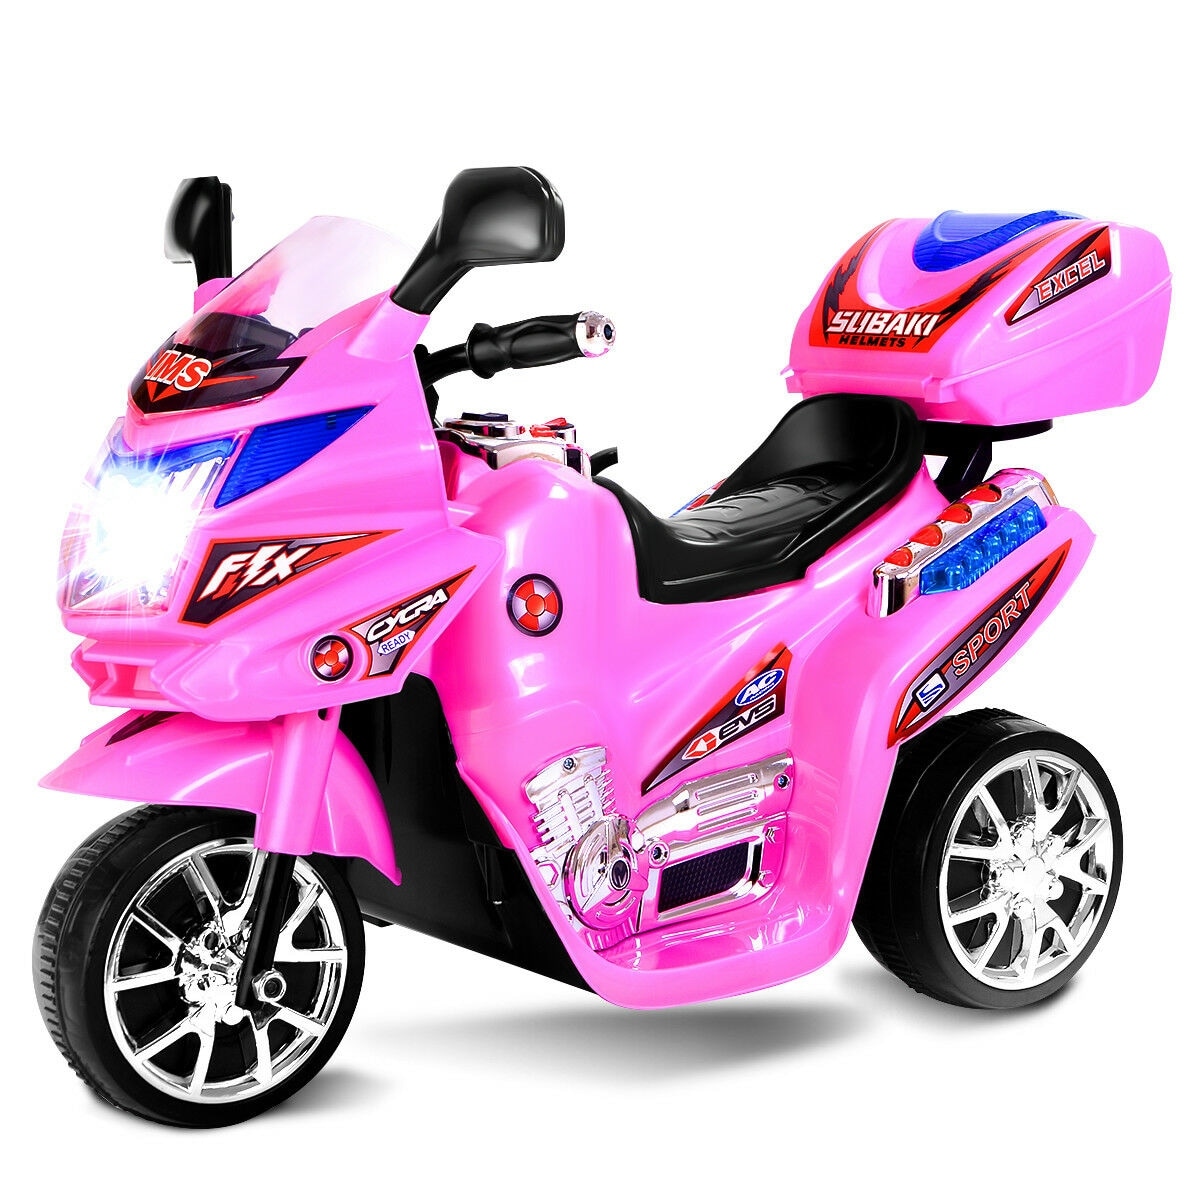 pink 3 wheel motorcycle